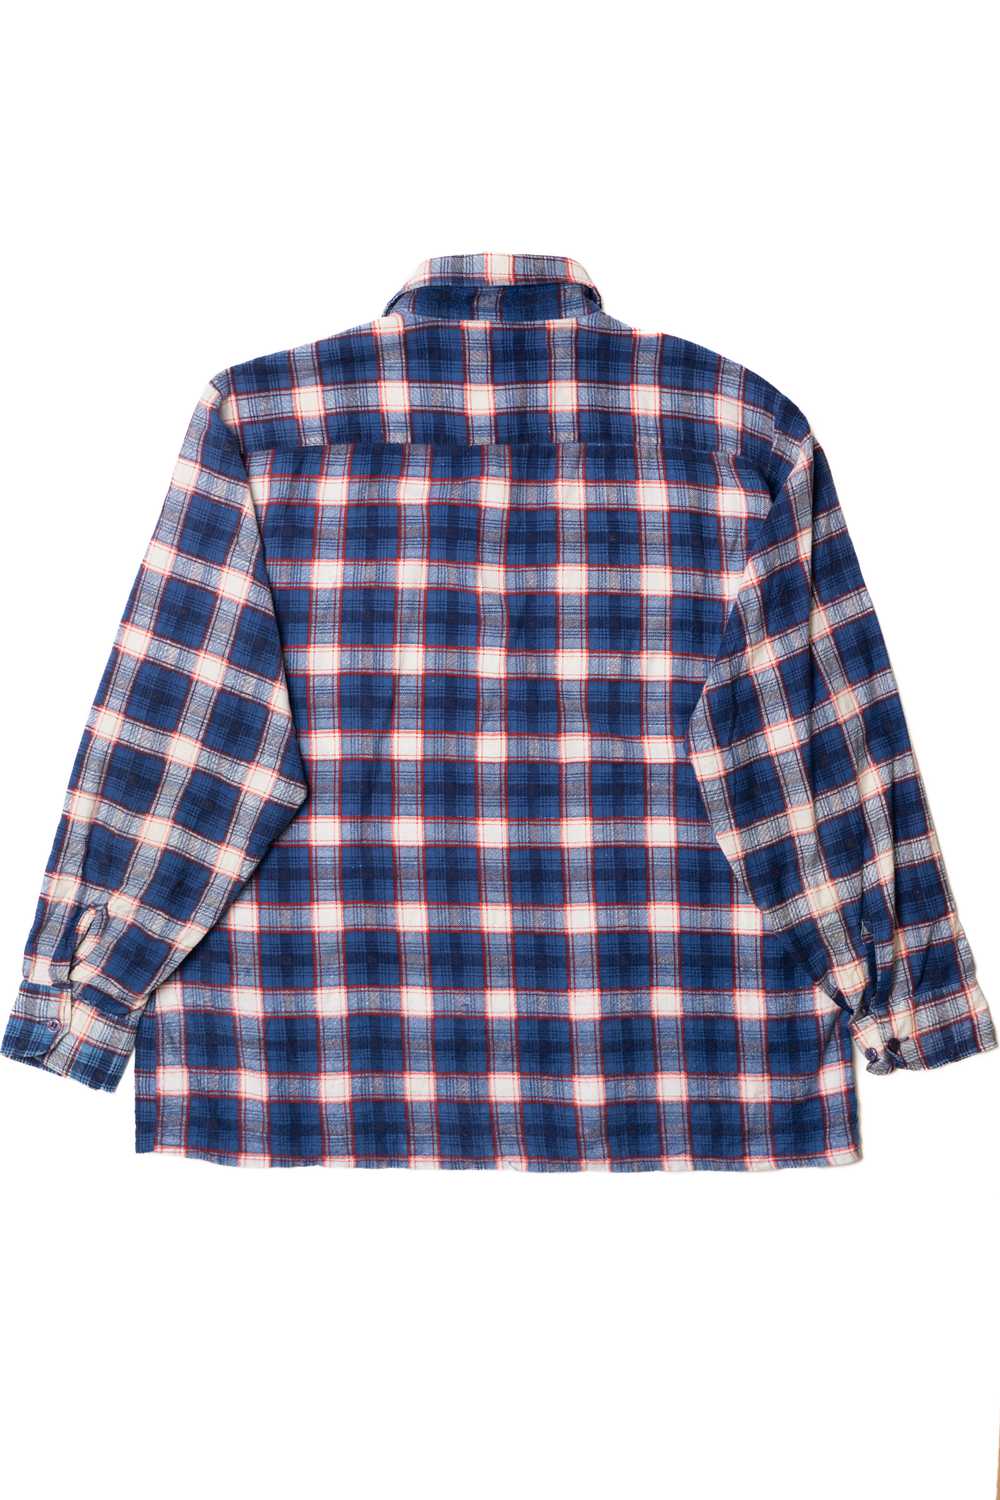 Dickies Lightweight Flannel Shirt - image 3